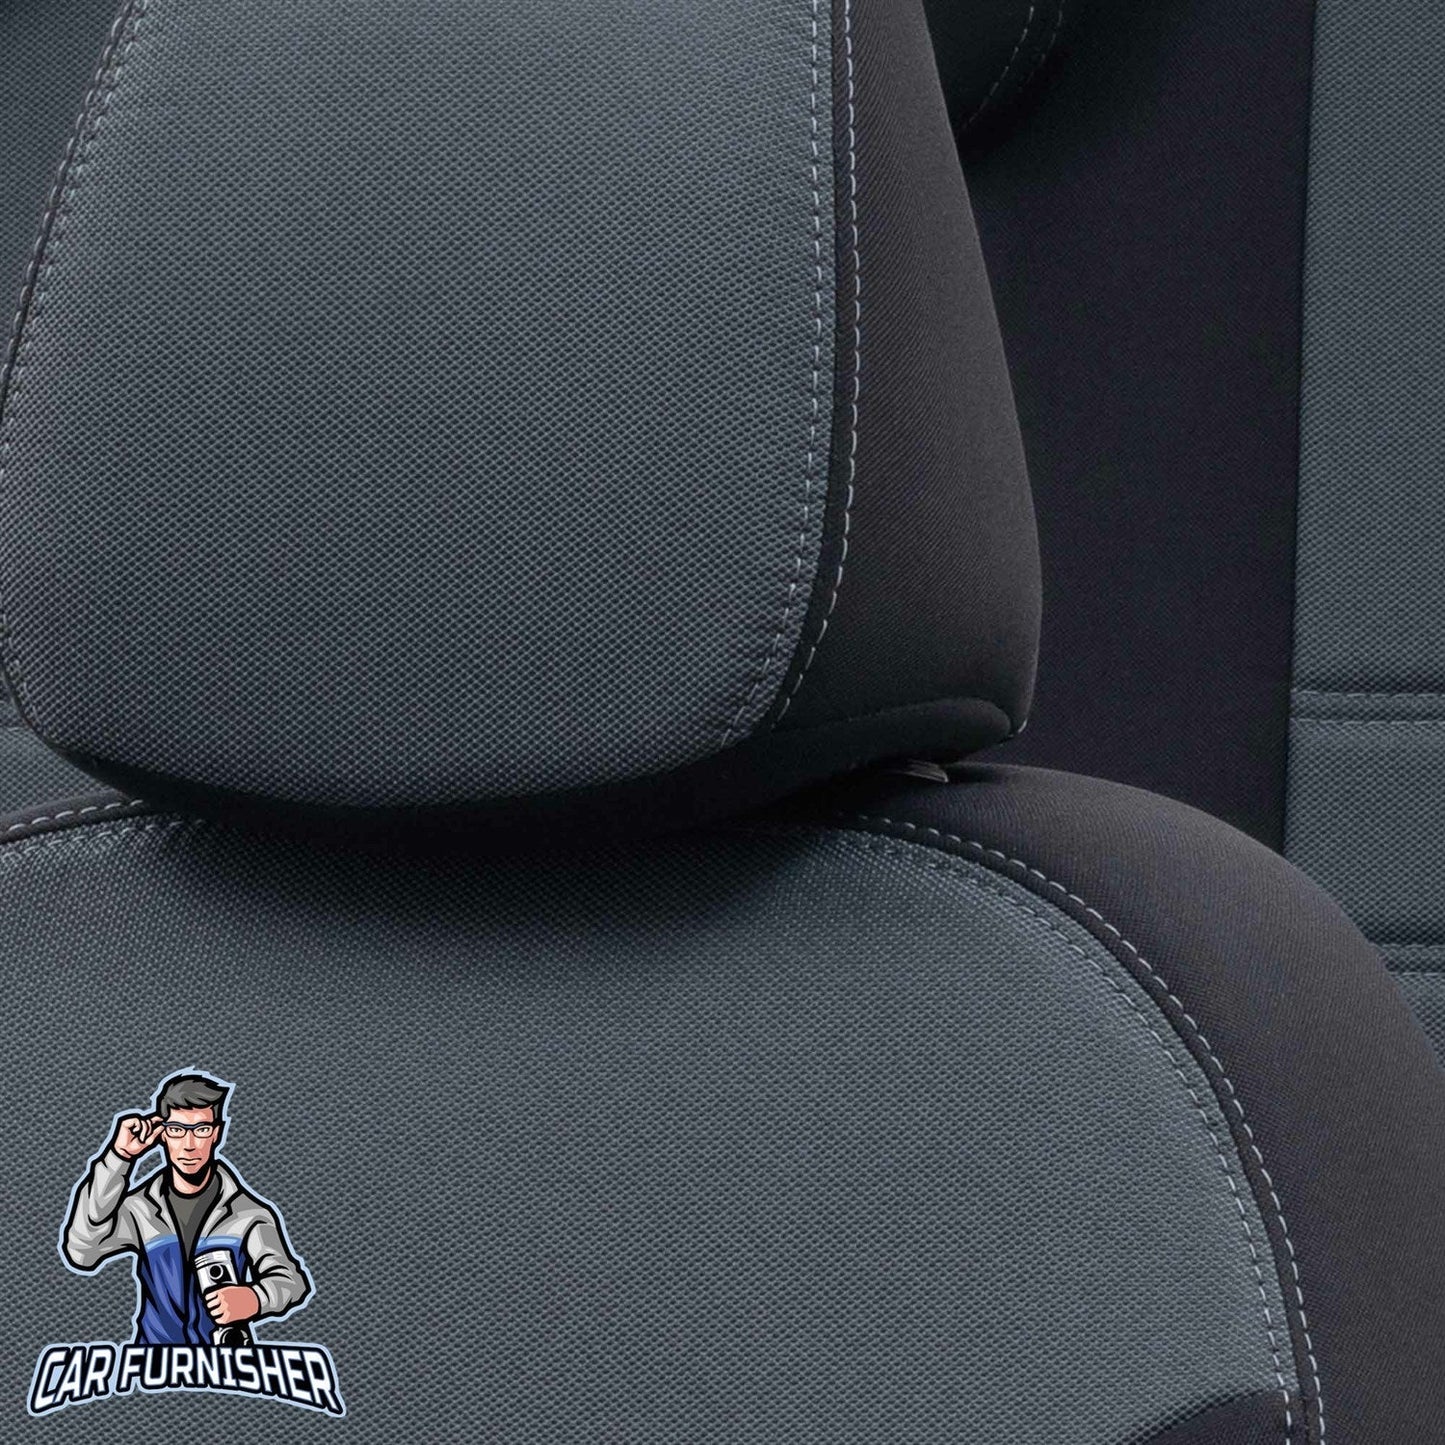 Ssangyong Actyon Seat Covers Original Jacquard Design Smoked Black Jacquard Fabric